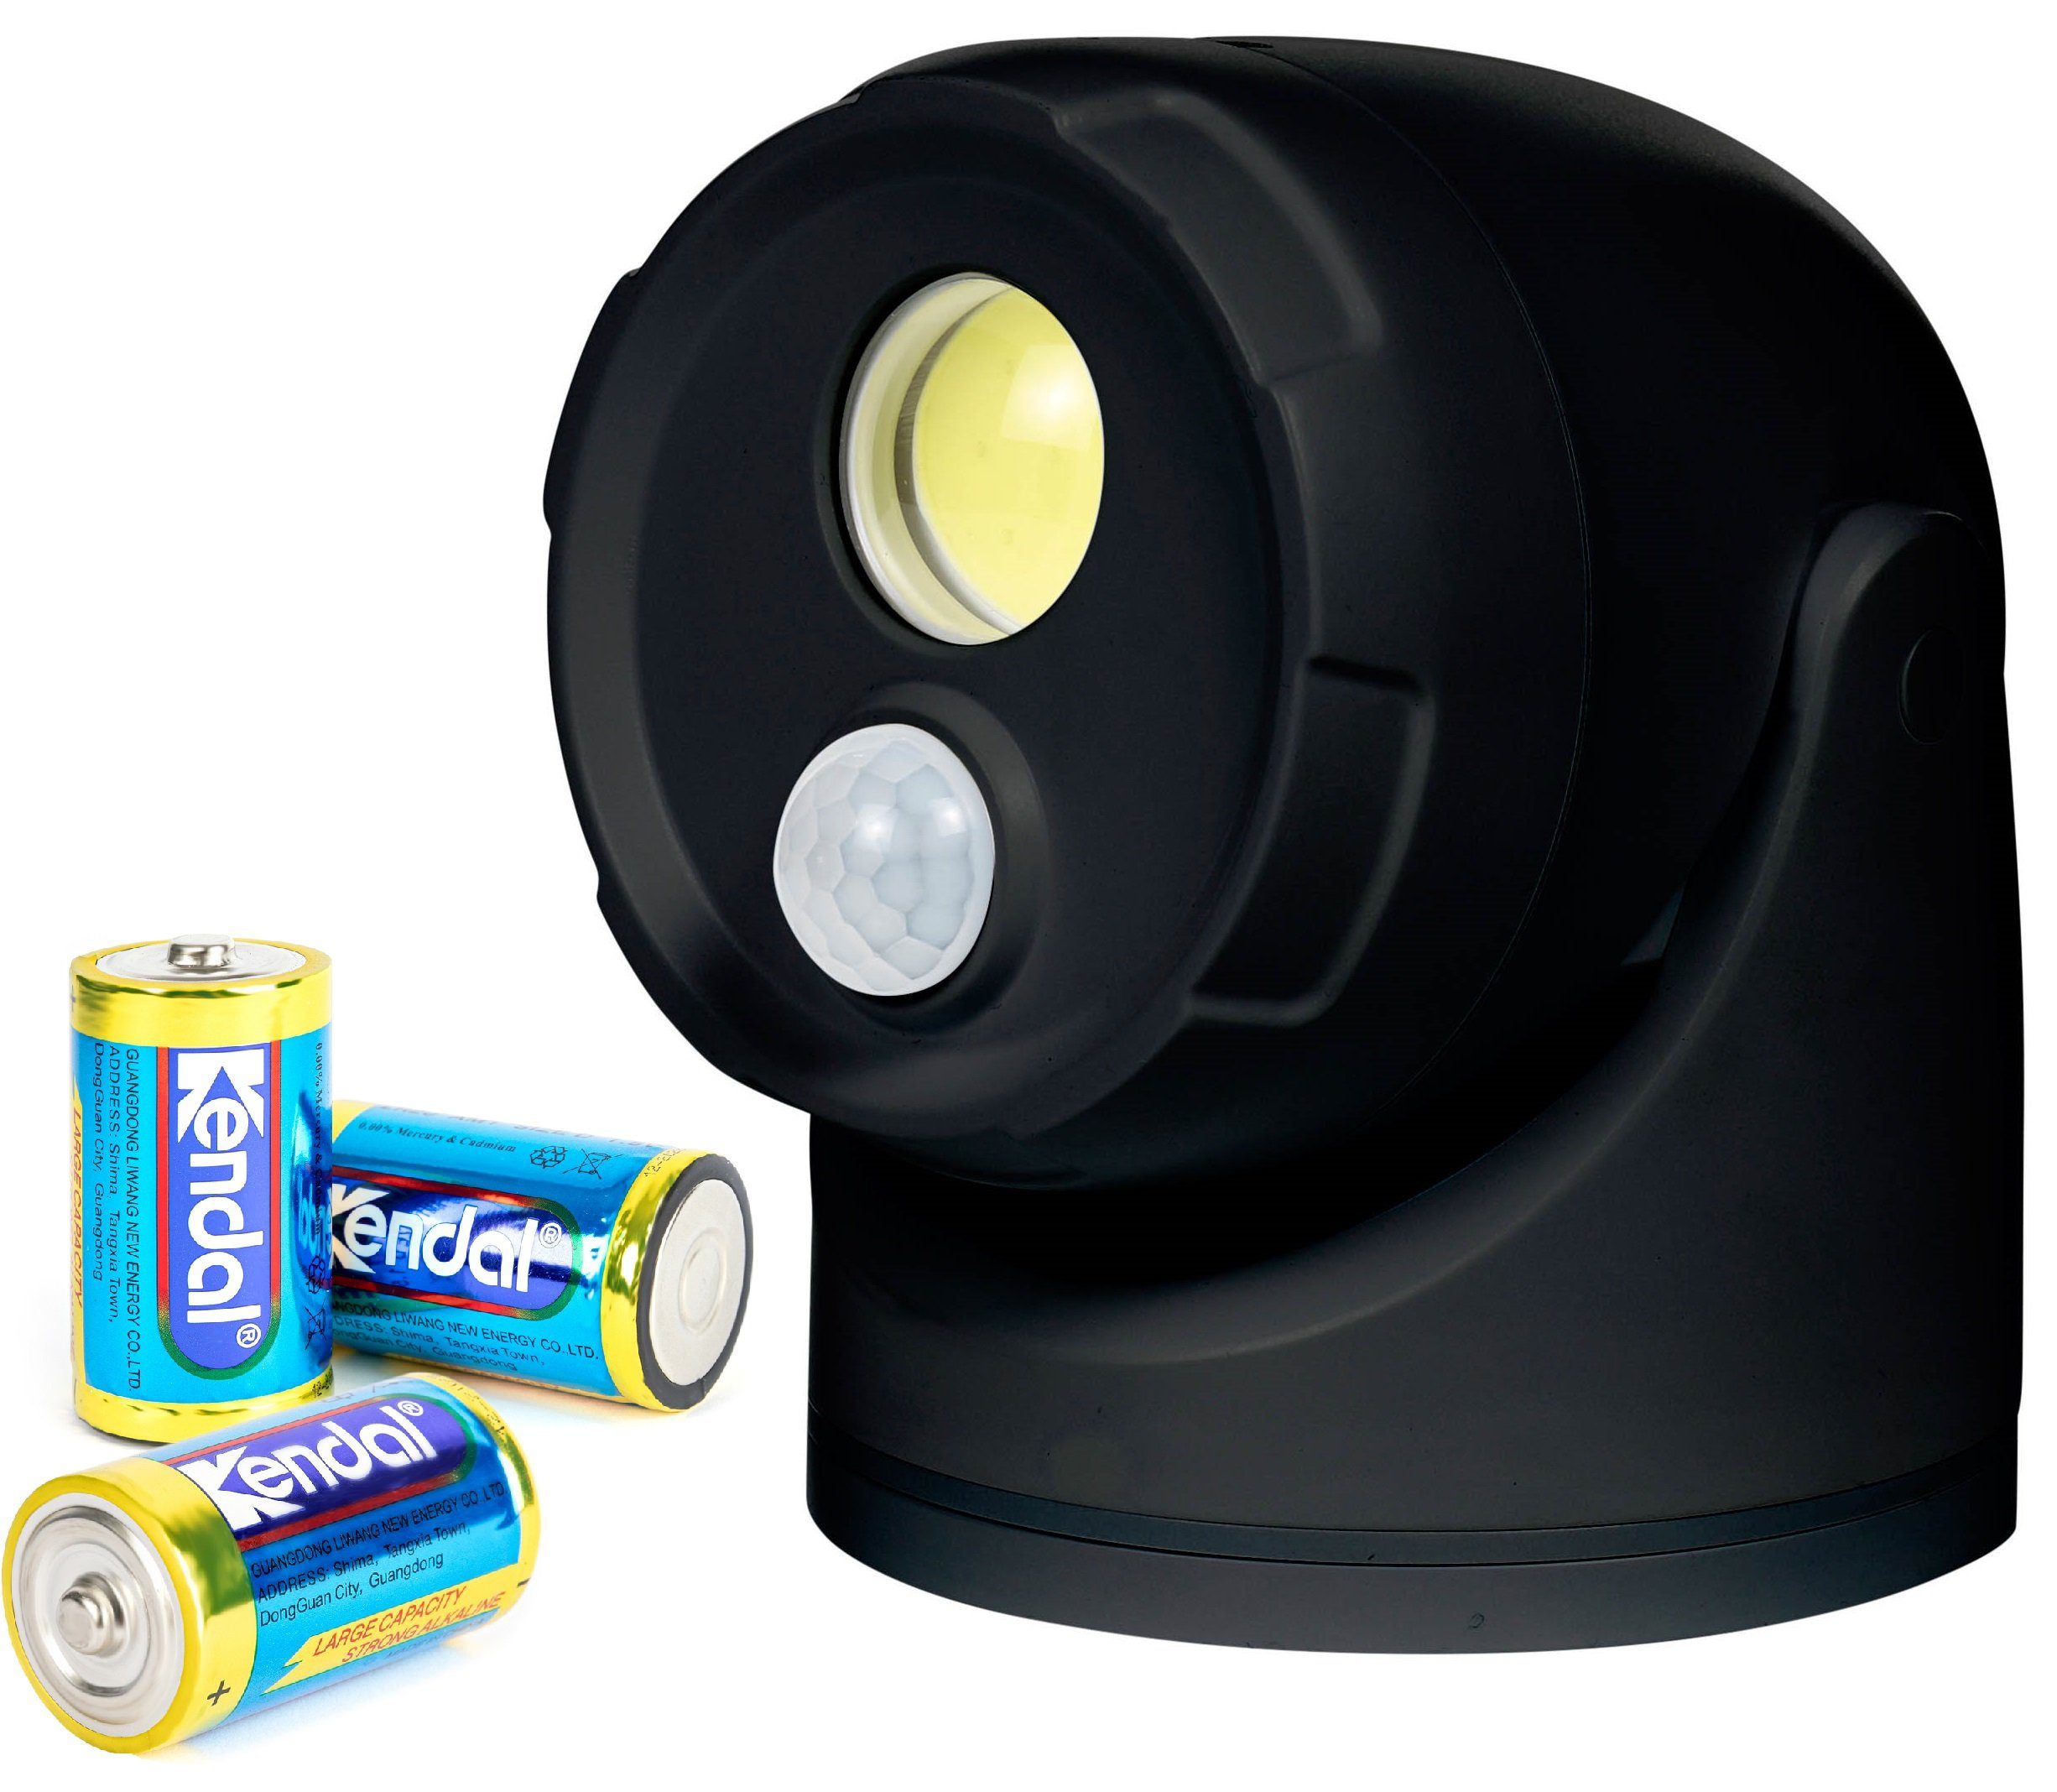 Northpoint Wandstrahler LED Batterie Strahler Flutlicht Batterie Schwarz Spot Bewegungsmelder mit inkl. D-Batterien